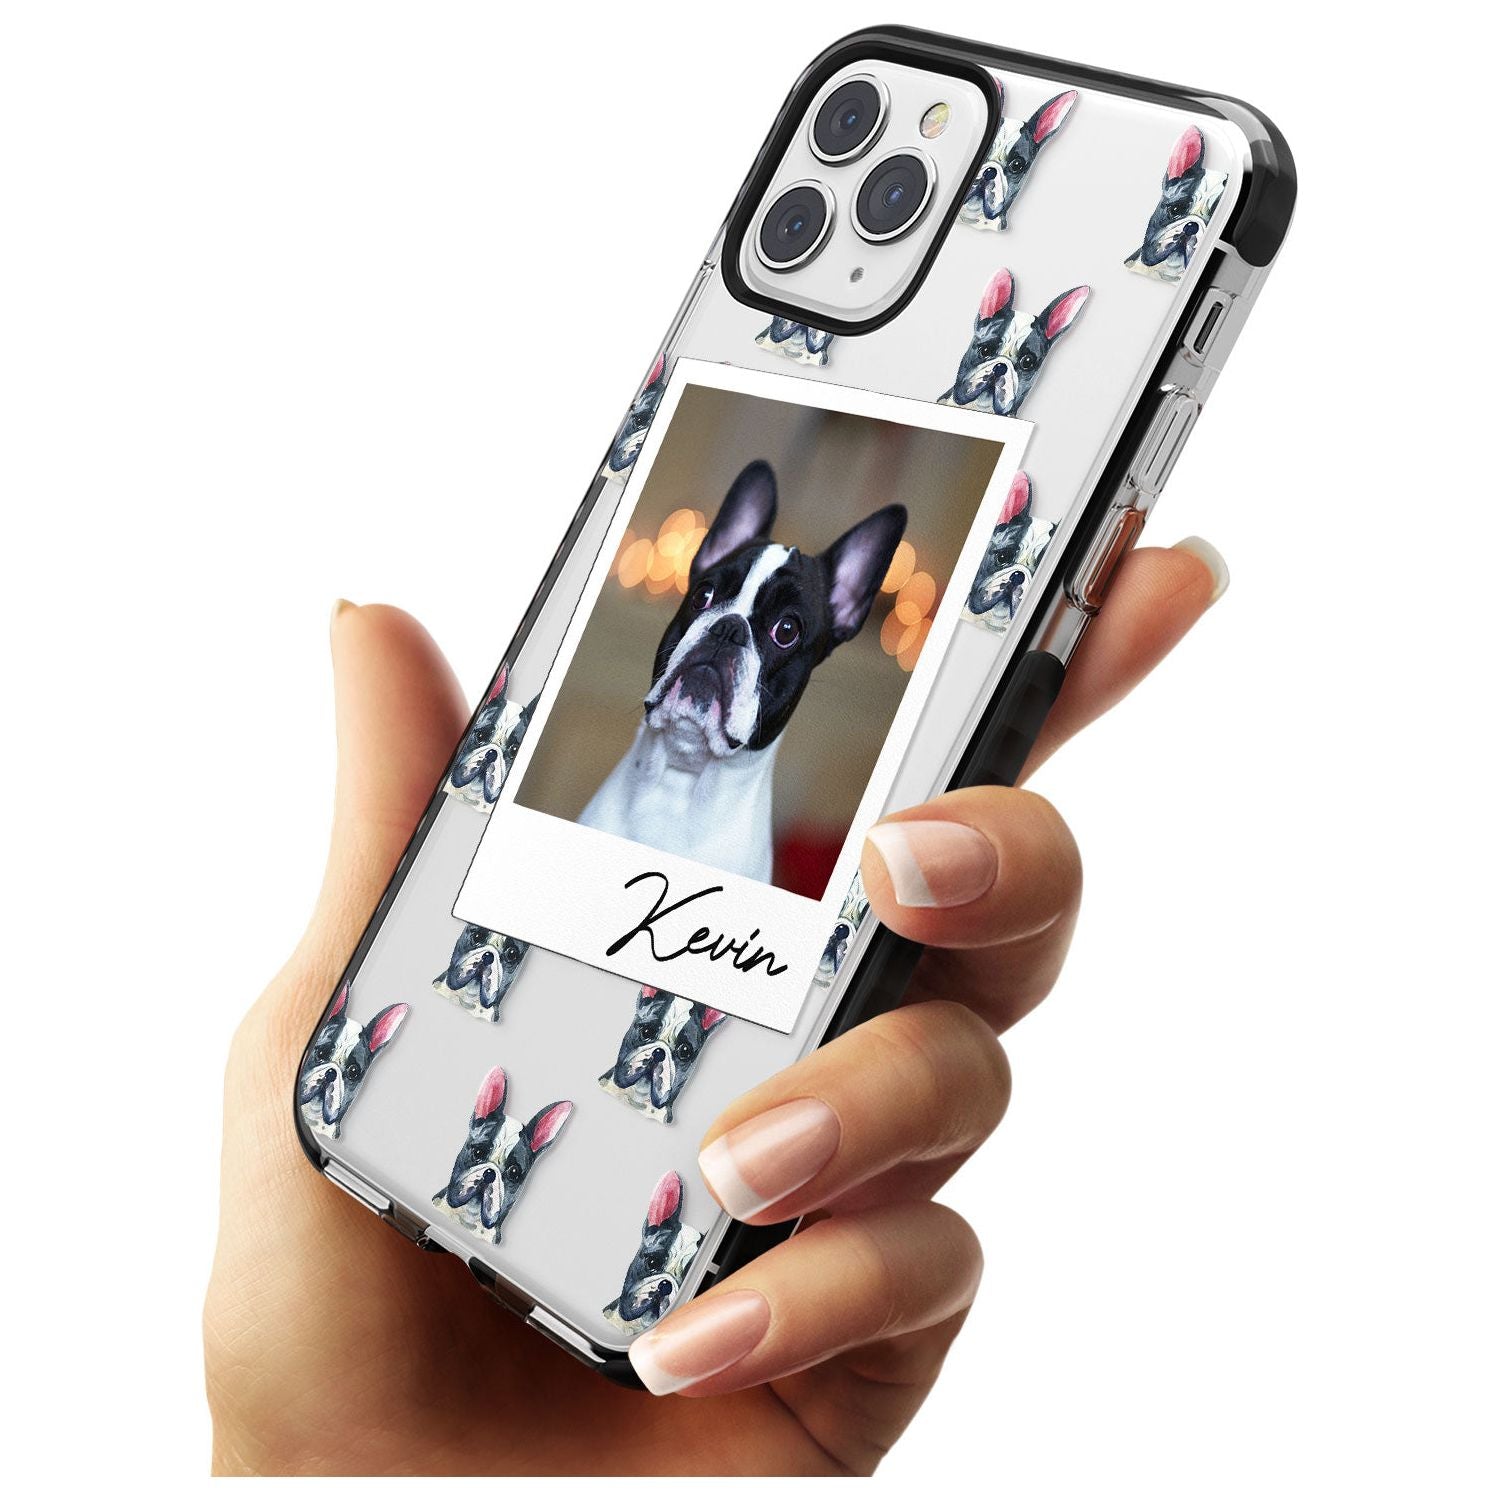 French Bulldog, Black & White - Custom Dog Photo Pink Fade Impact Phone Case for iPhone 11